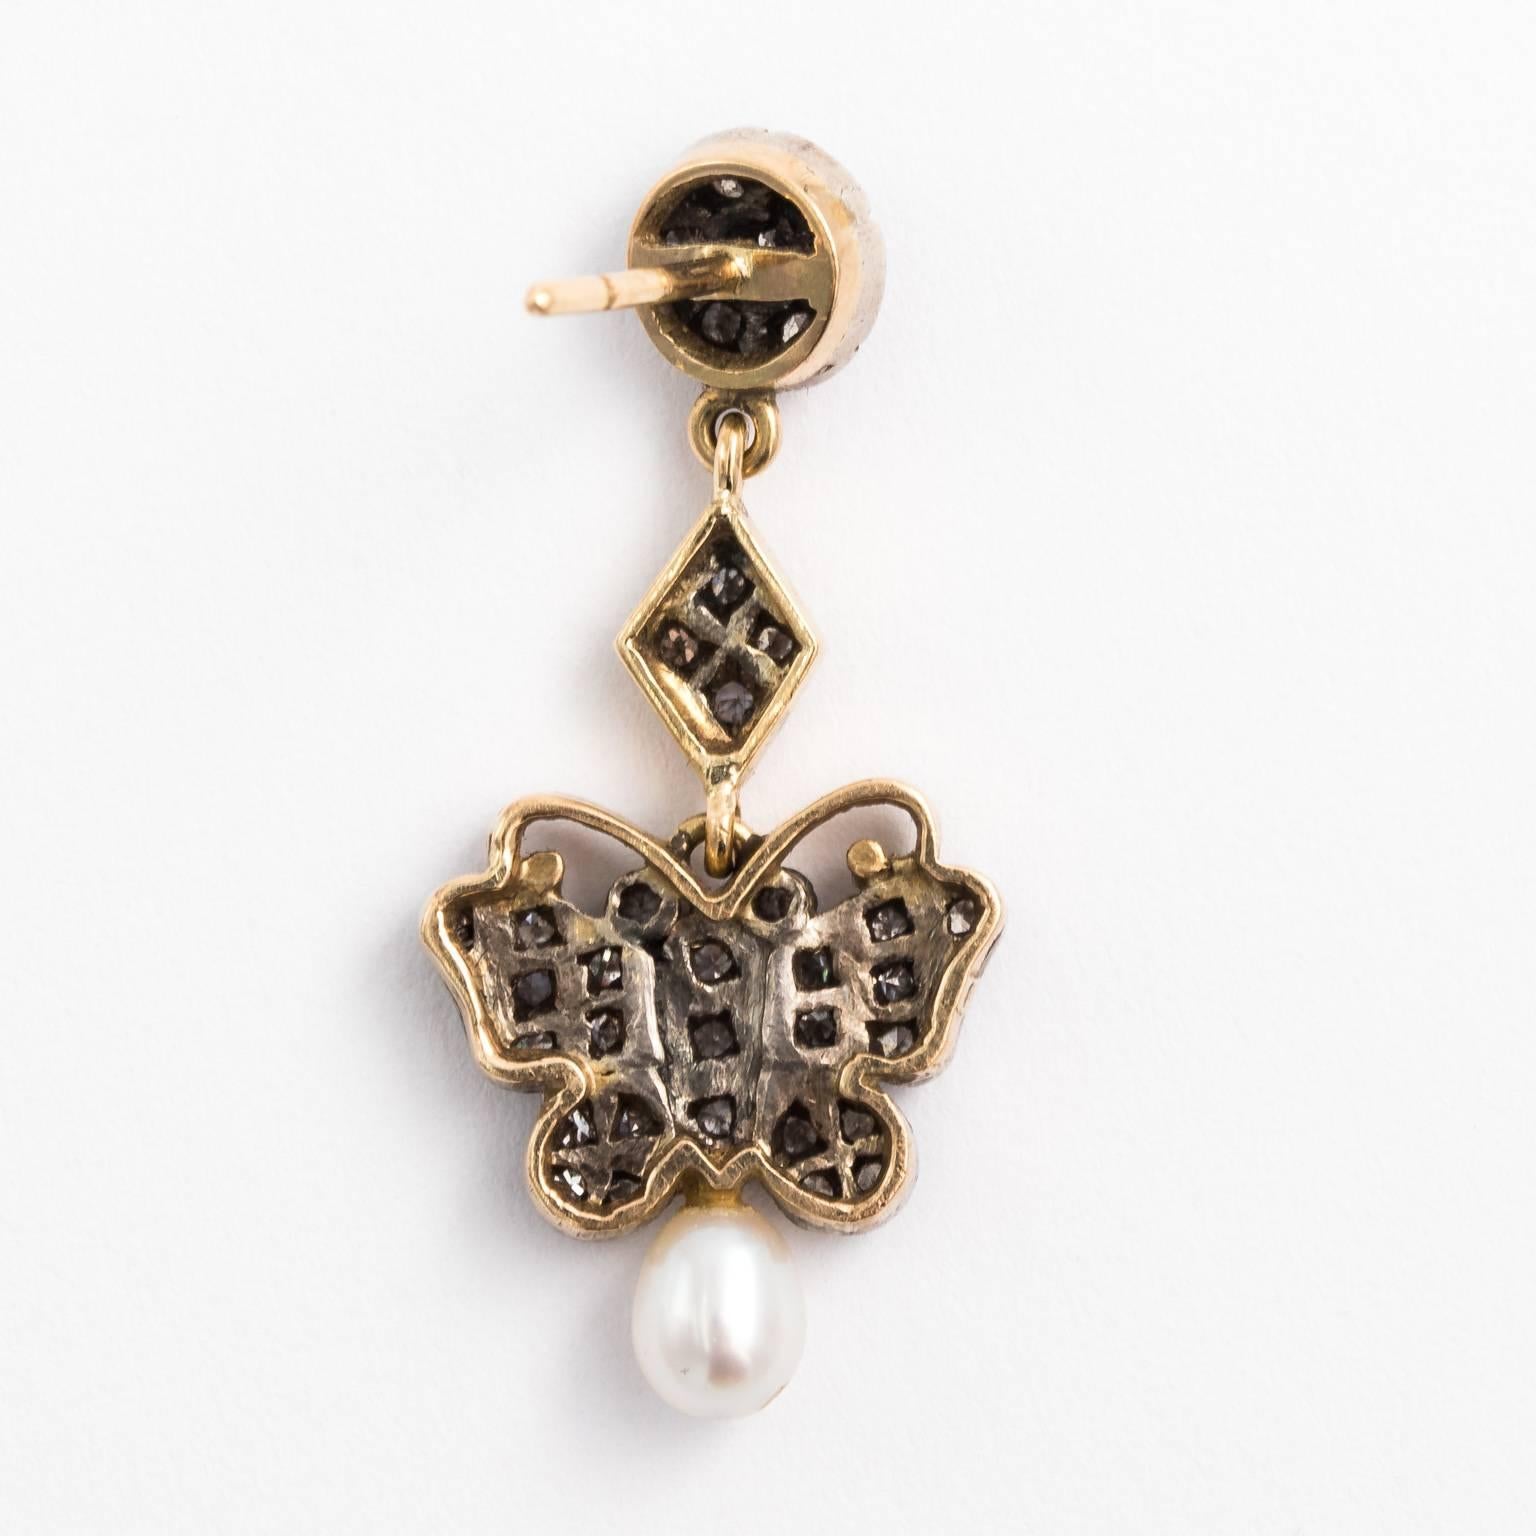 Circa early 20th century Art Nouveau diamond and pearl earrings.
